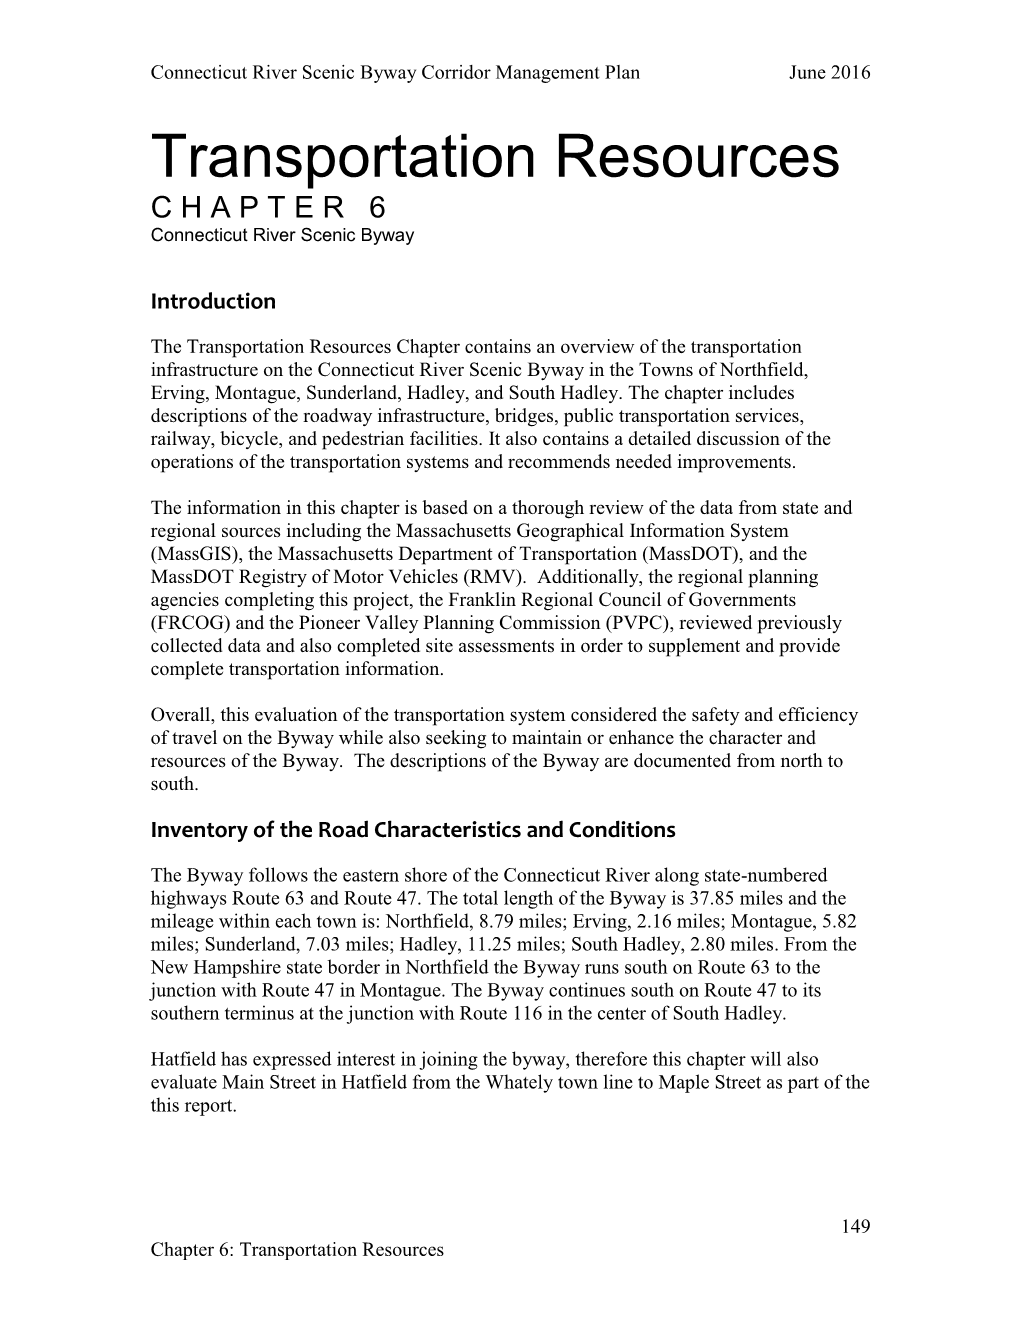 Chapter 6 Transportation Resources